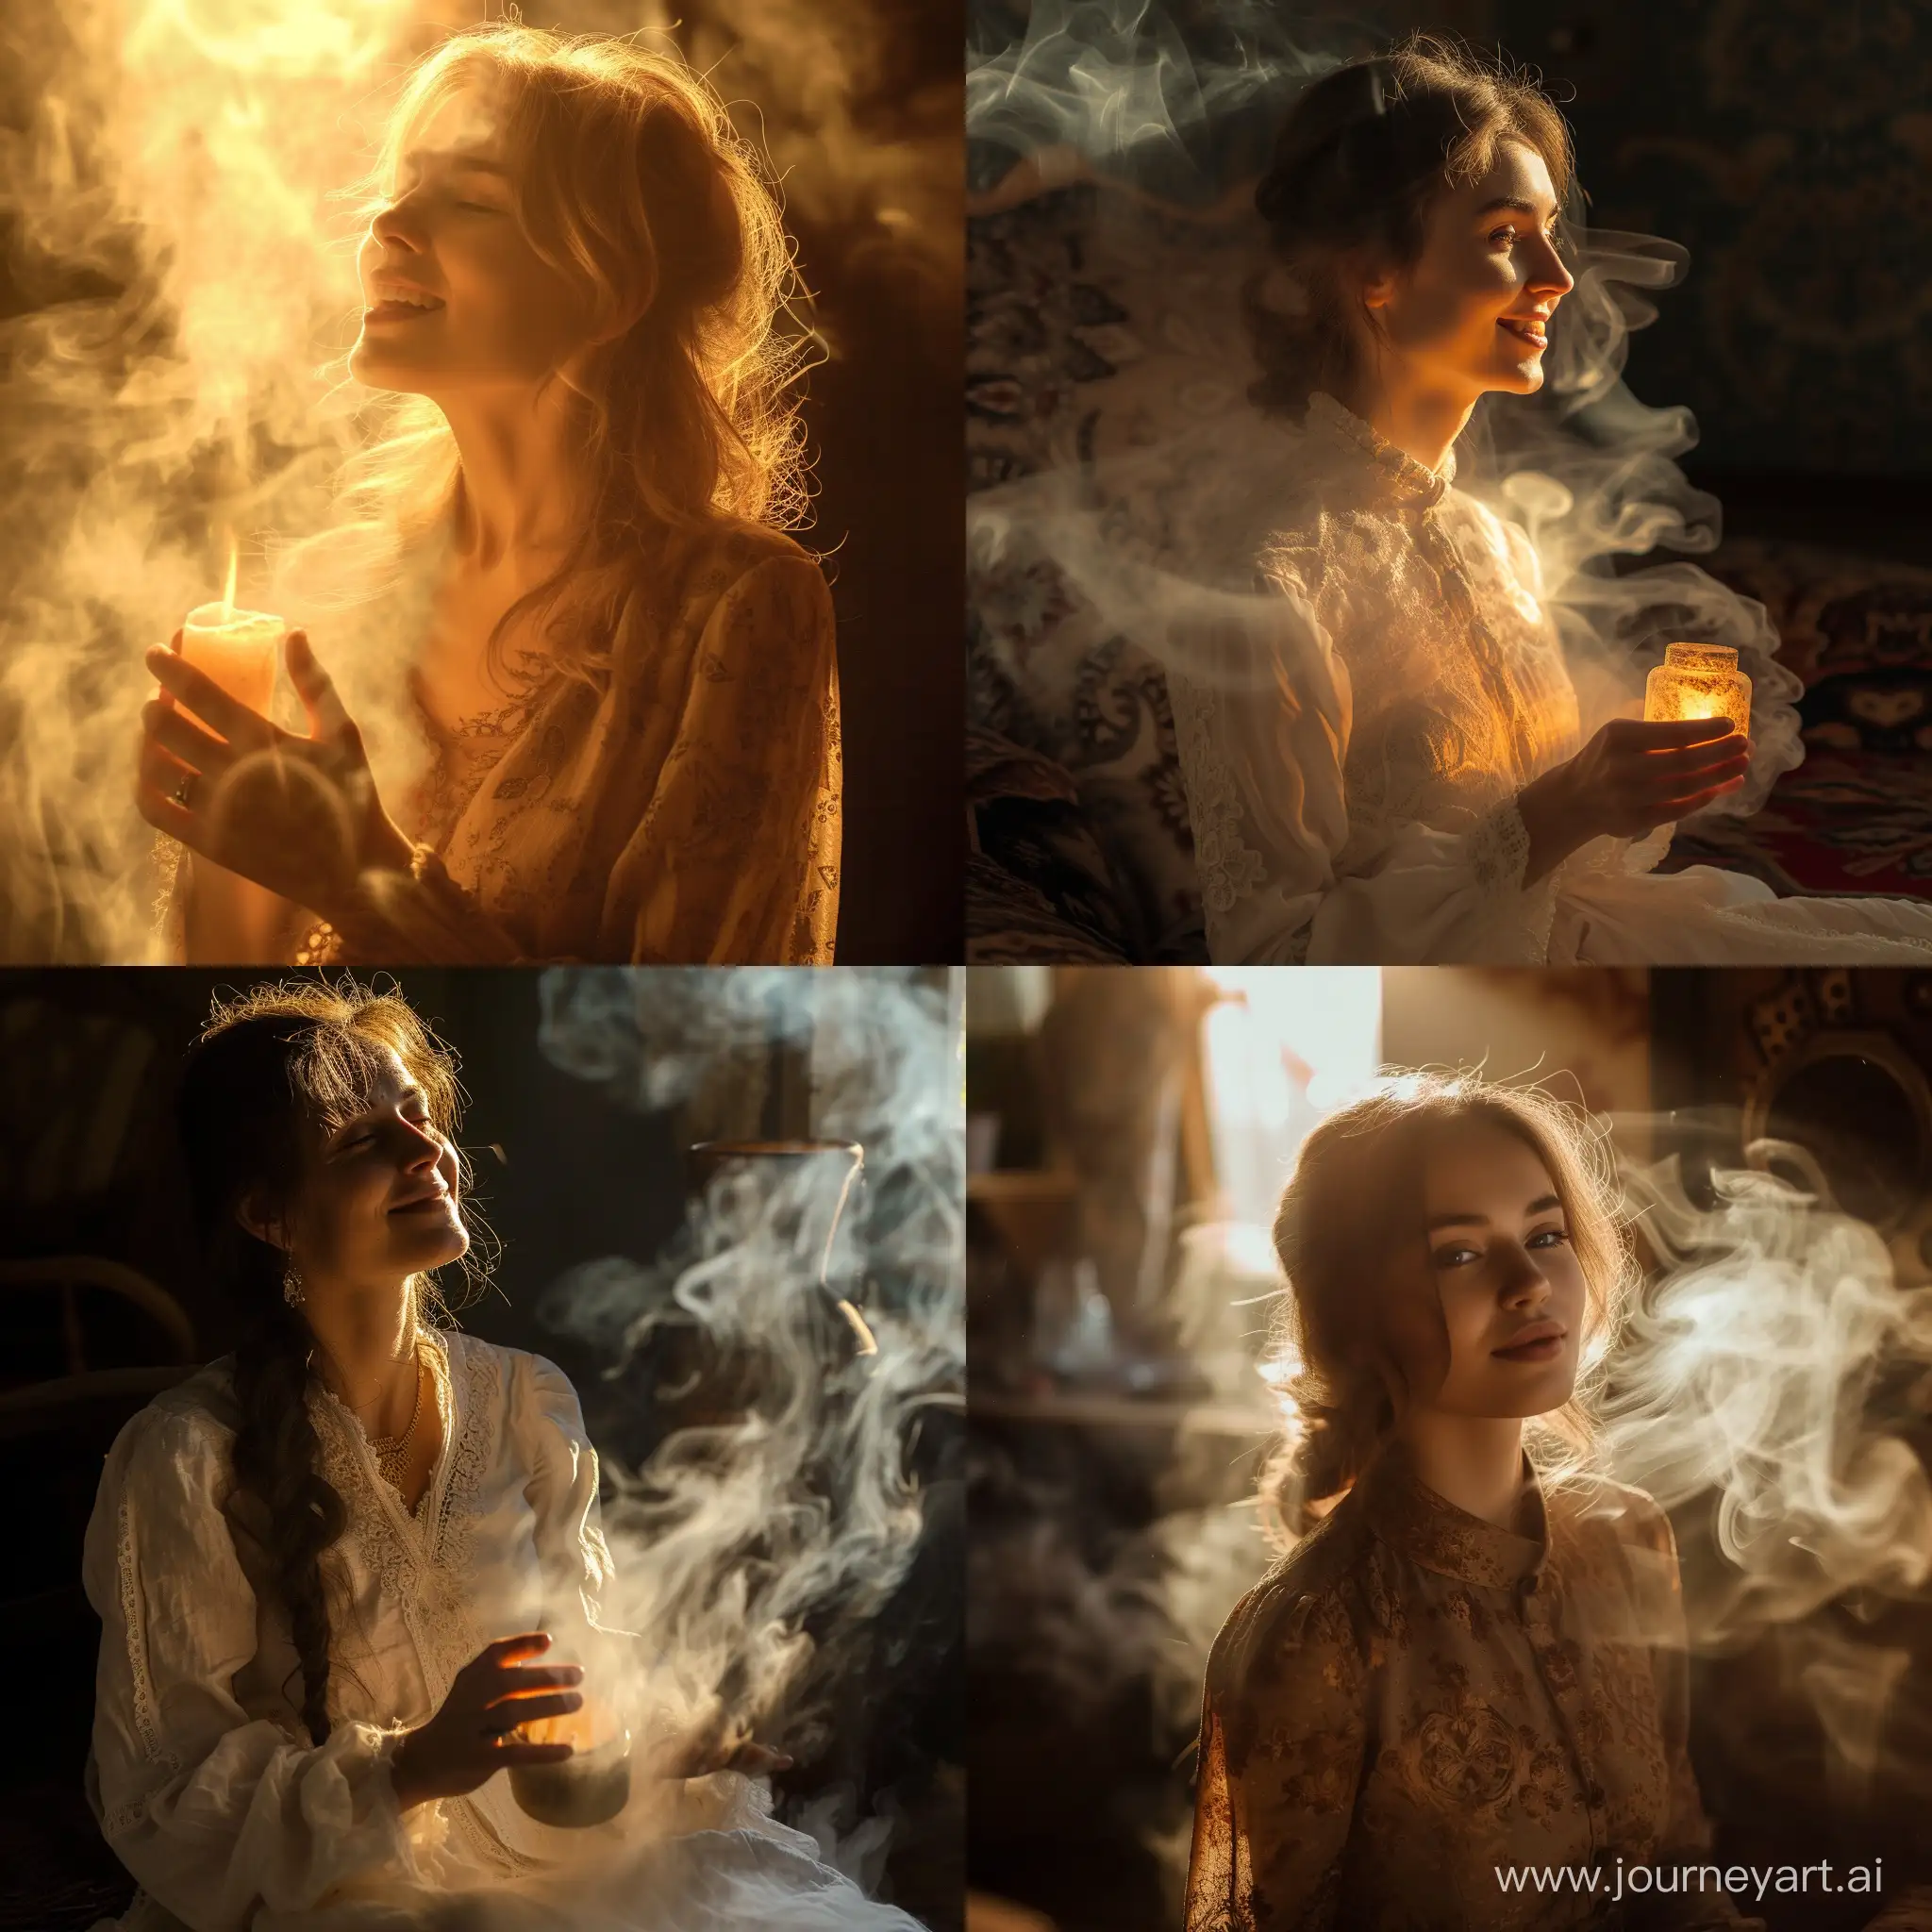 Slavic woman, joy, warm light, coziness, warmth, Slavic perfume in smoke